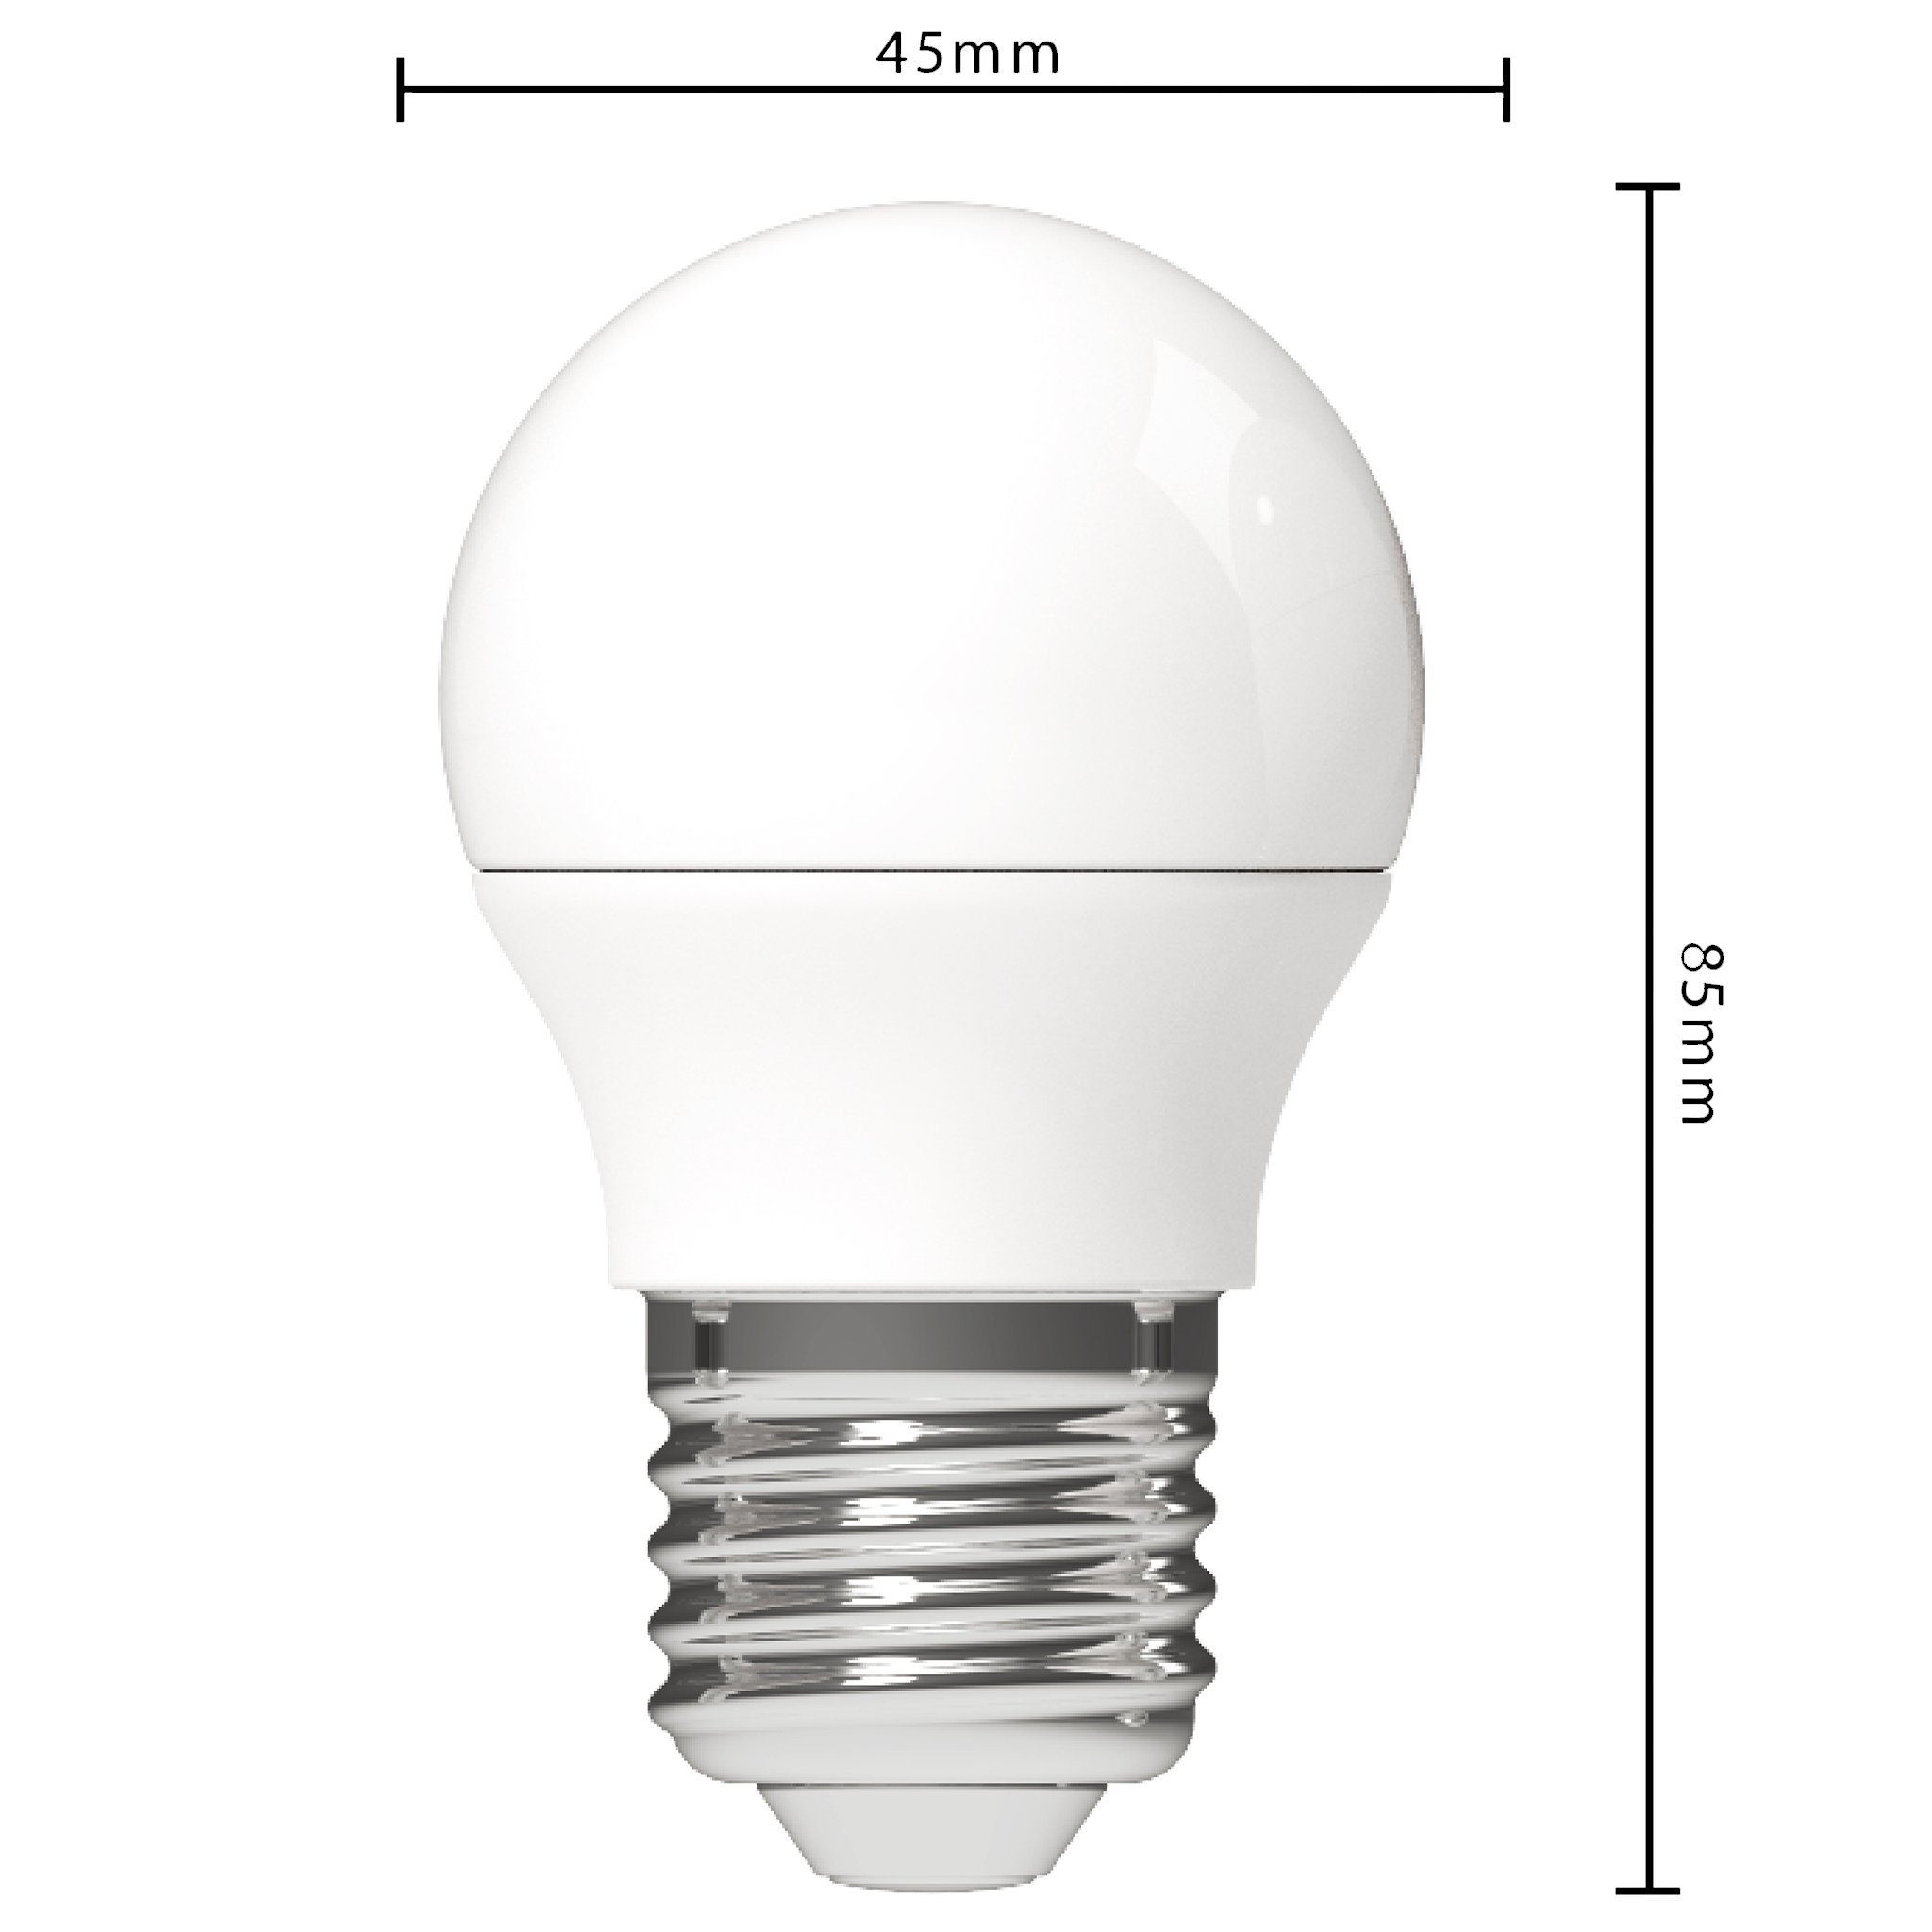 0620113 LED's LED-Leuchtmittel dimmbar Kugel, E27 5W Dim2warm light E27, G45 LED Opal